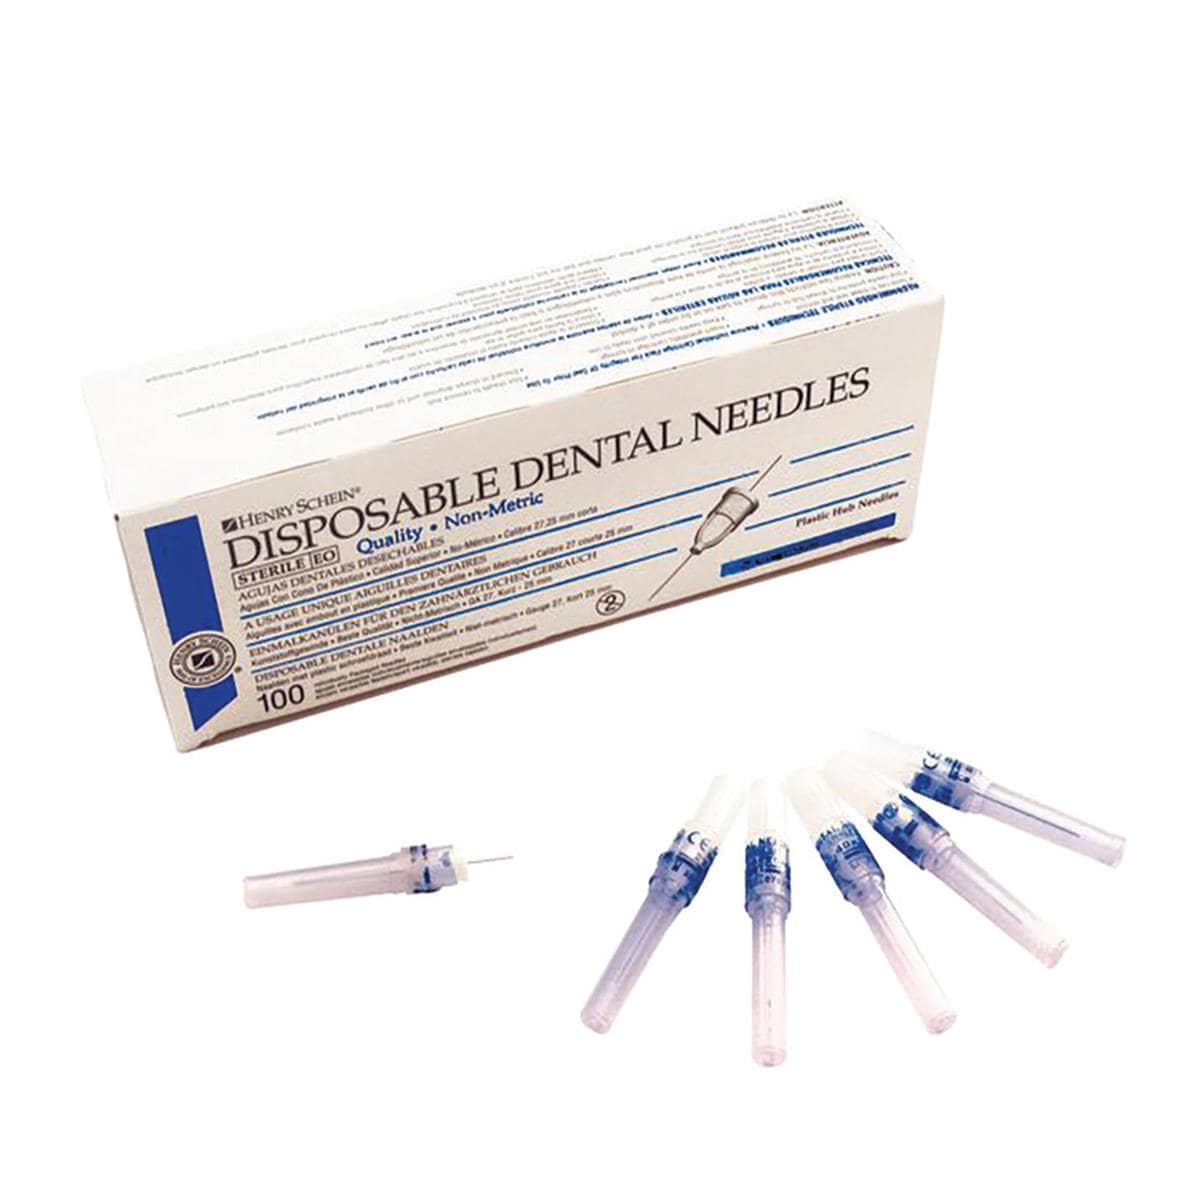 HS Needles Plastic Hub Disposable 30G Extra Short 10mm 100pk